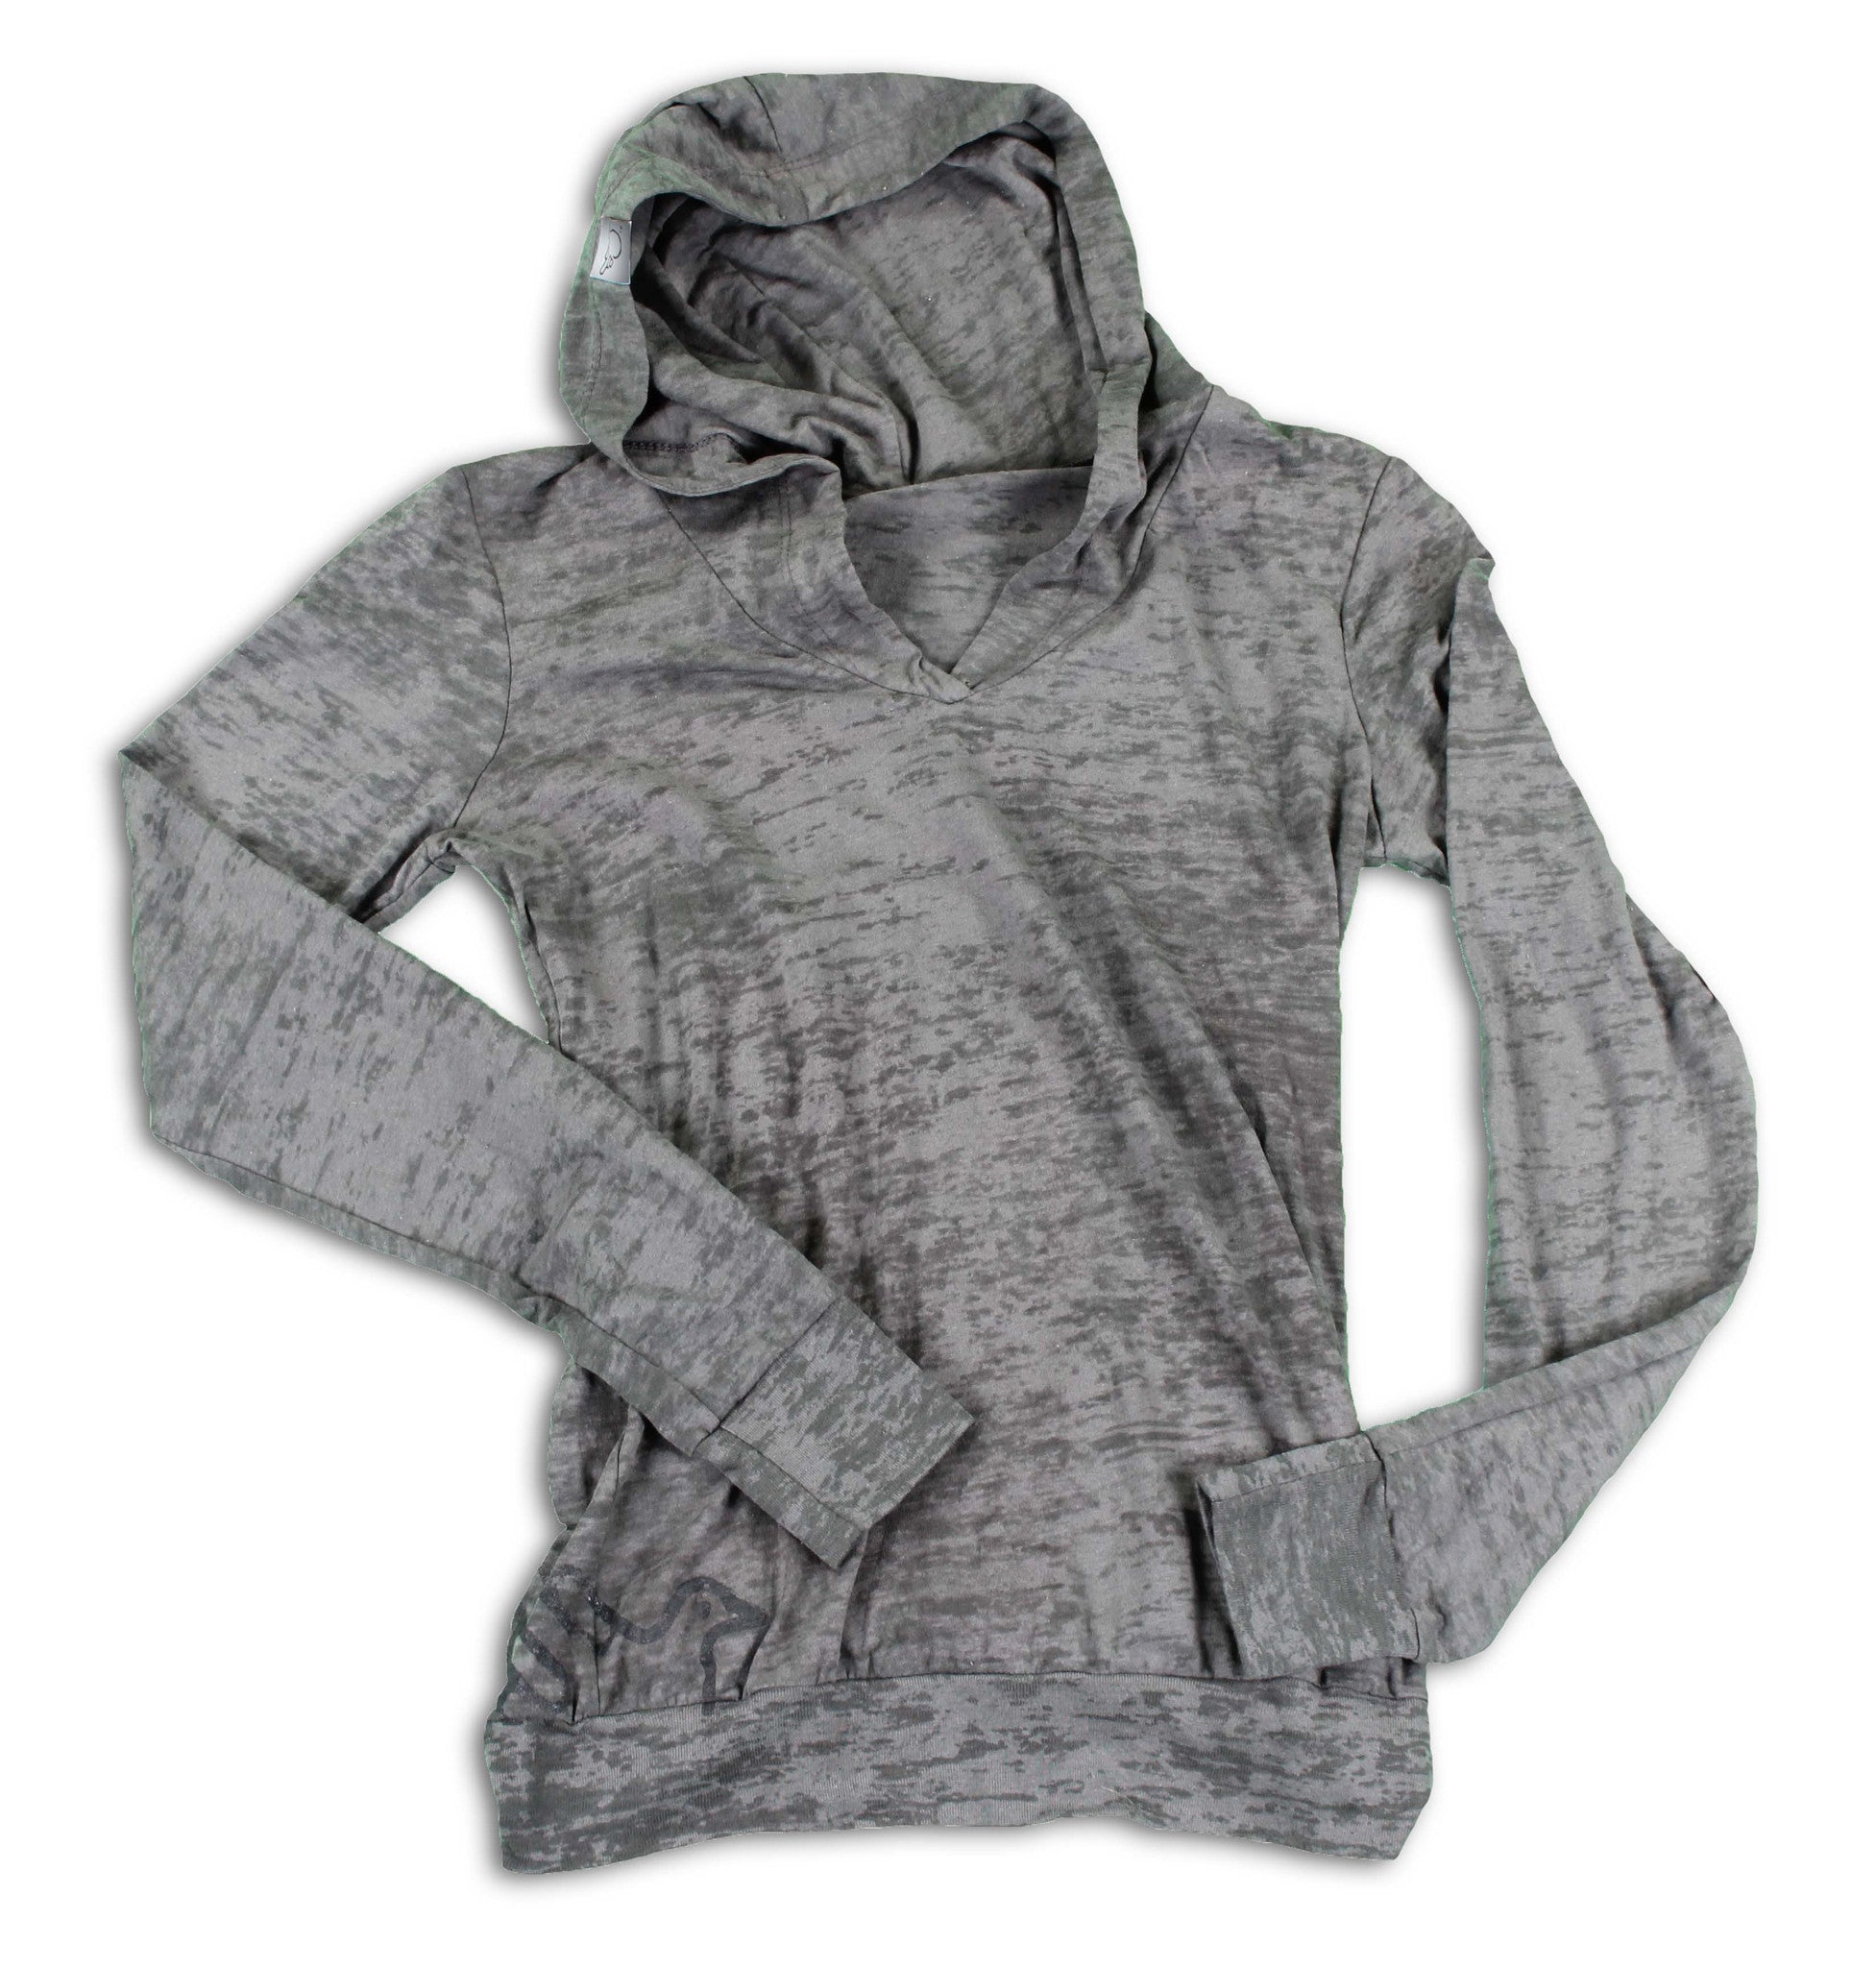 Women's Hoodies and Sweatshirts - Find Some Effing Longsleeve Apparel ...